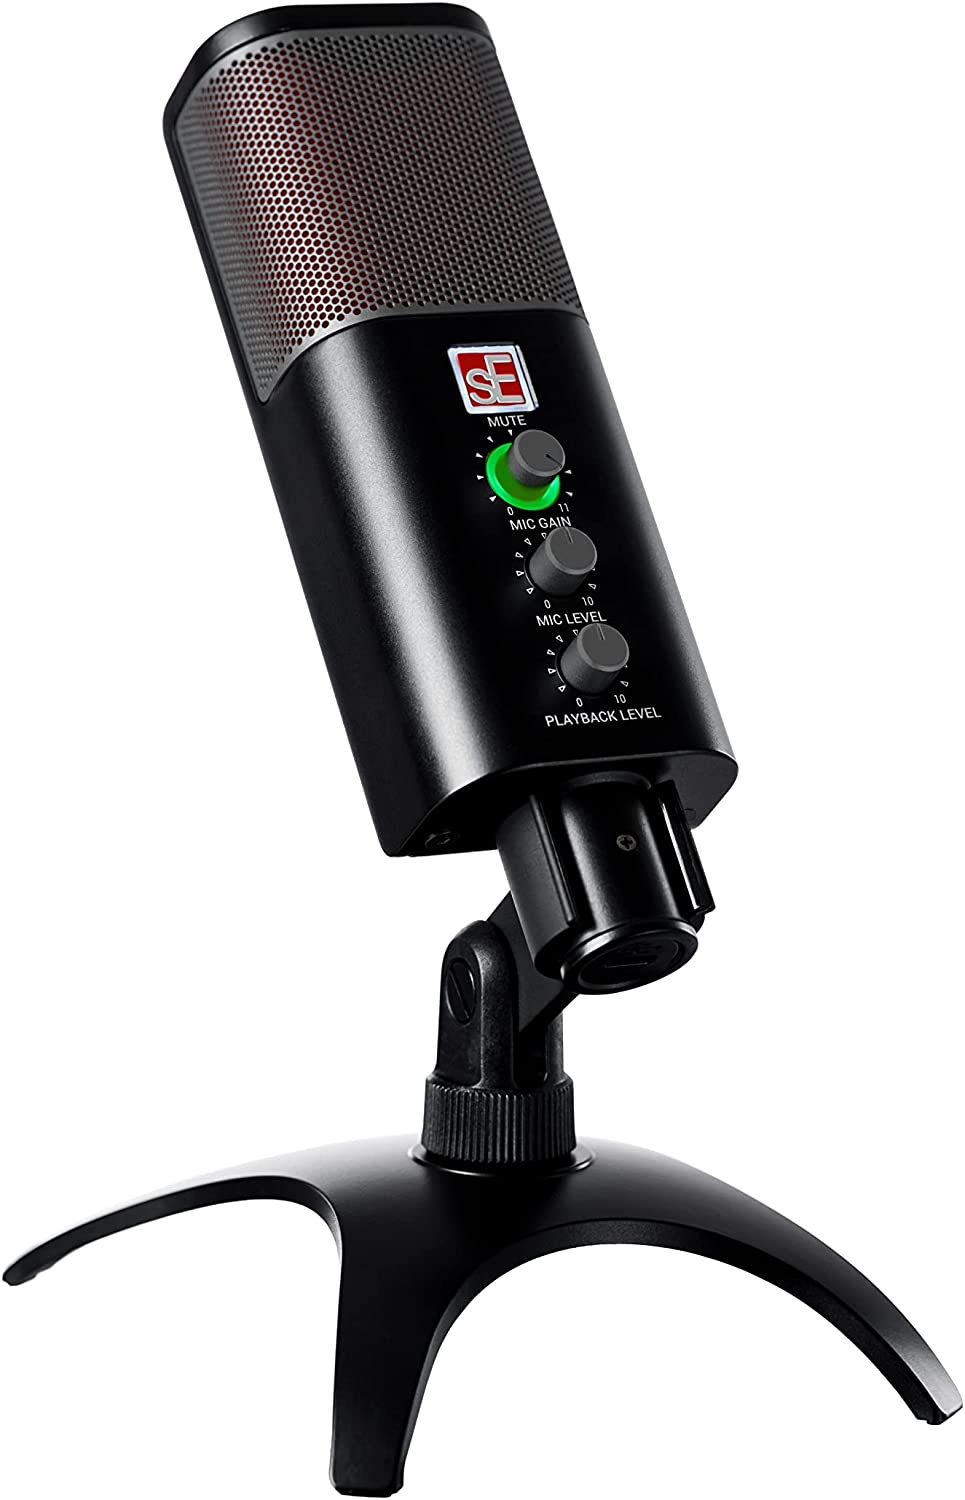 Blue Yeti Usb Microphone, Headphones & Microphones, Electronics